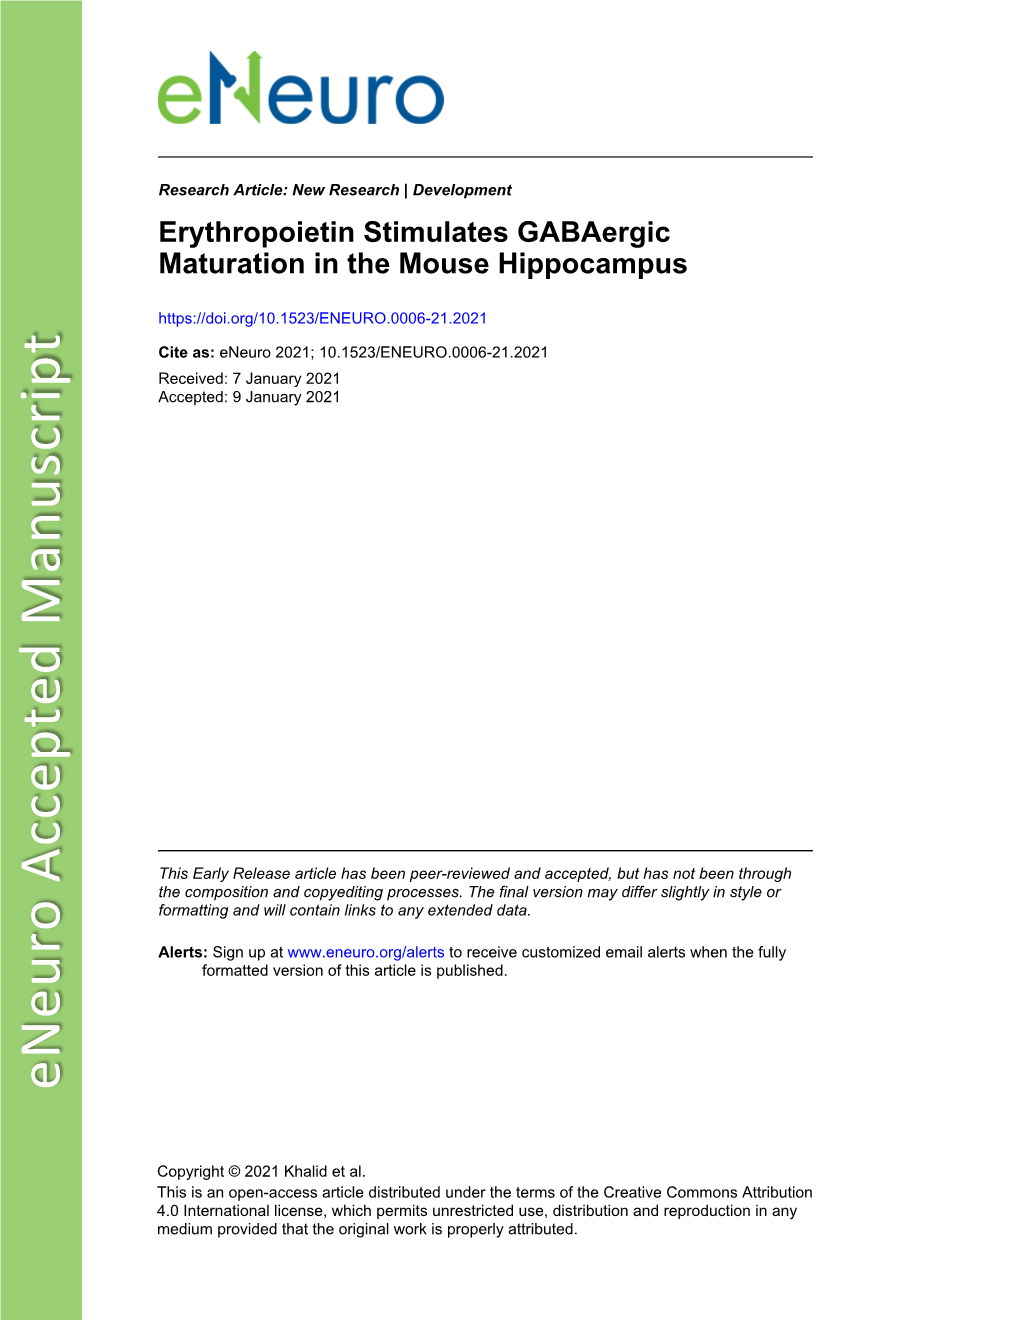 Erythropoietin Stimulates Gabaergic Maturation in the Mouse Hippocampus